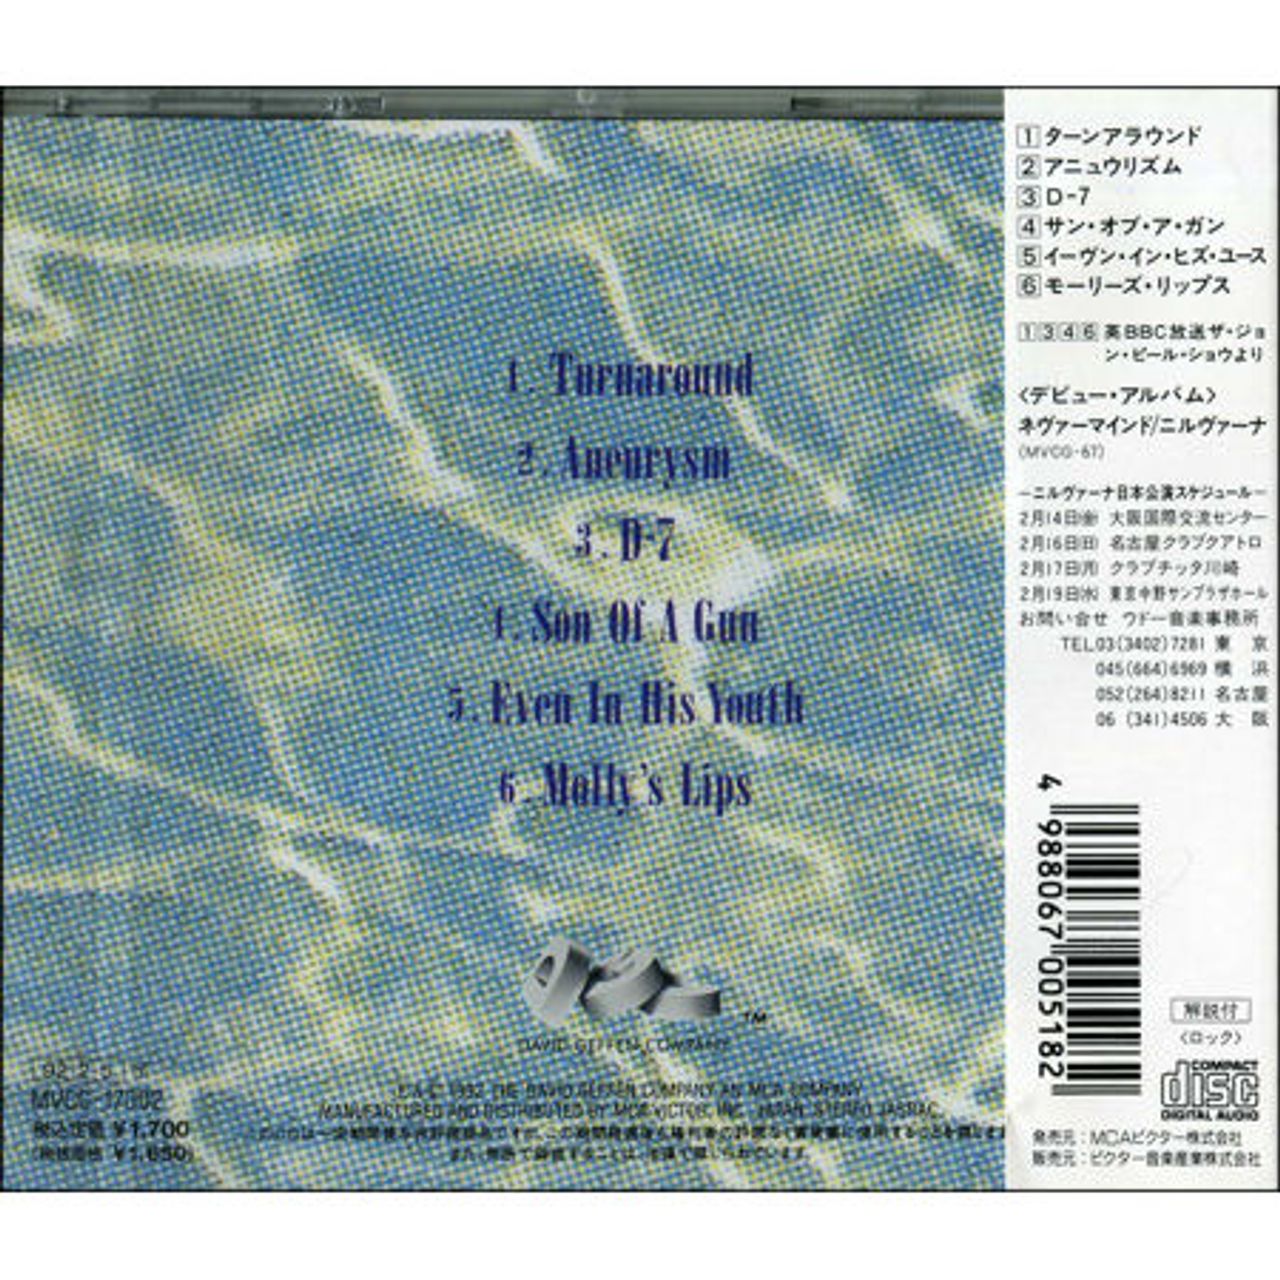 Nirvana (US) Hormoaning - Original Issue Japanese CD album